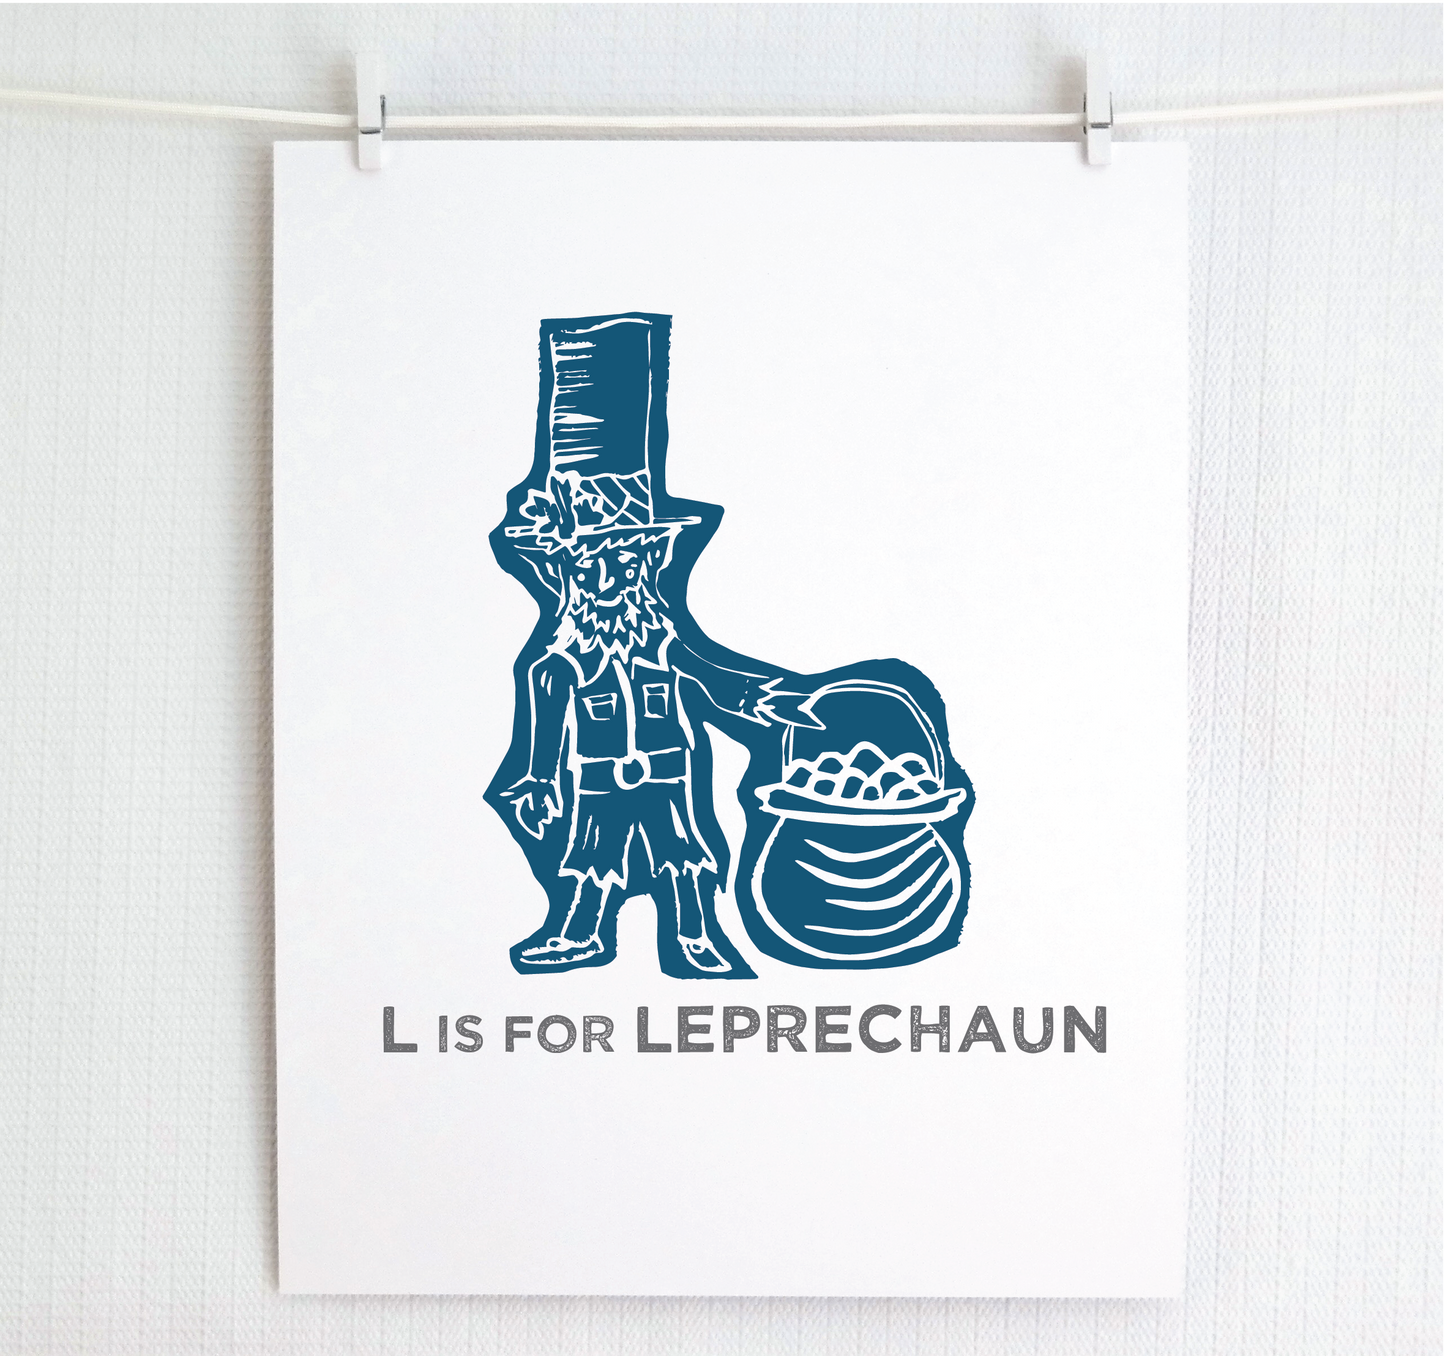 L is for Leprechaun